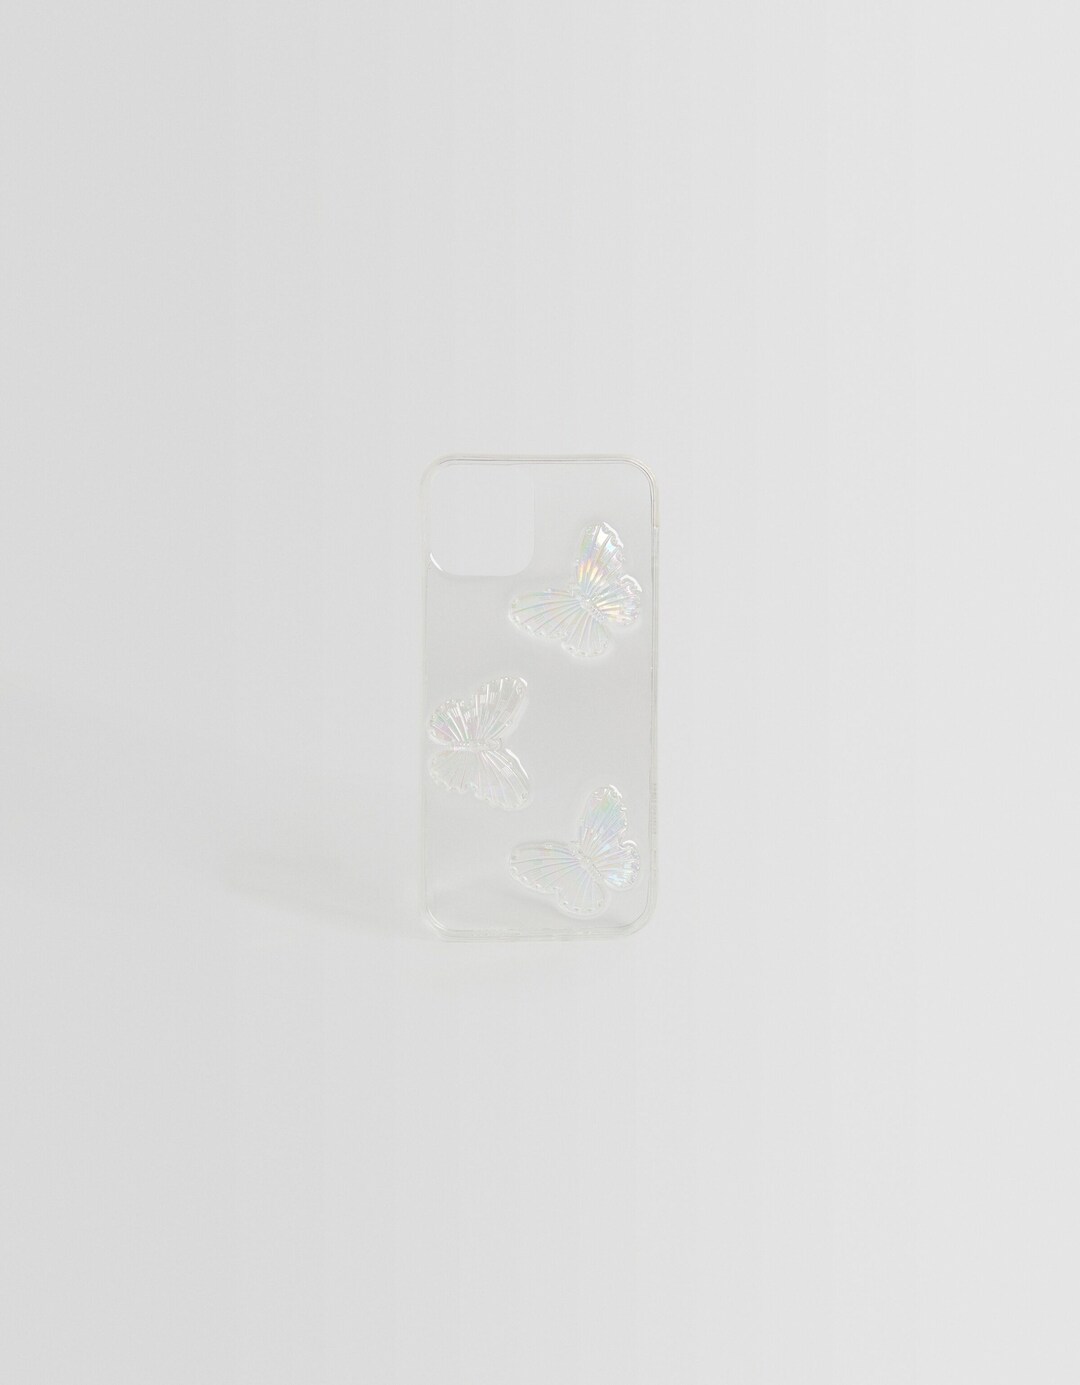 Carcasa móvil iPhone mariposas iridiscentes